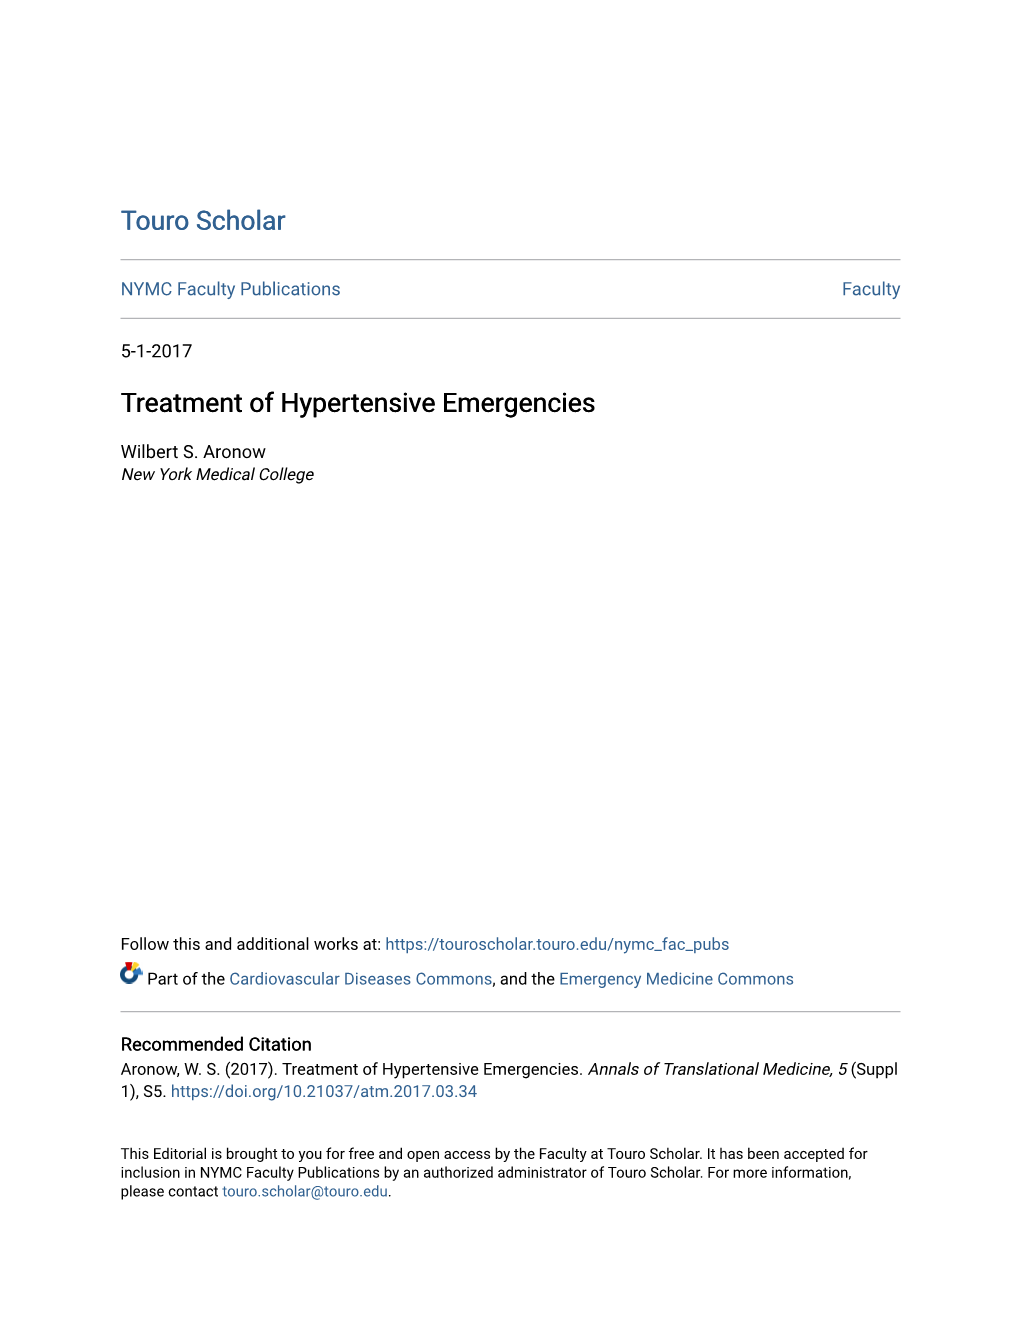 Treatment of Hypertensive Emergencies